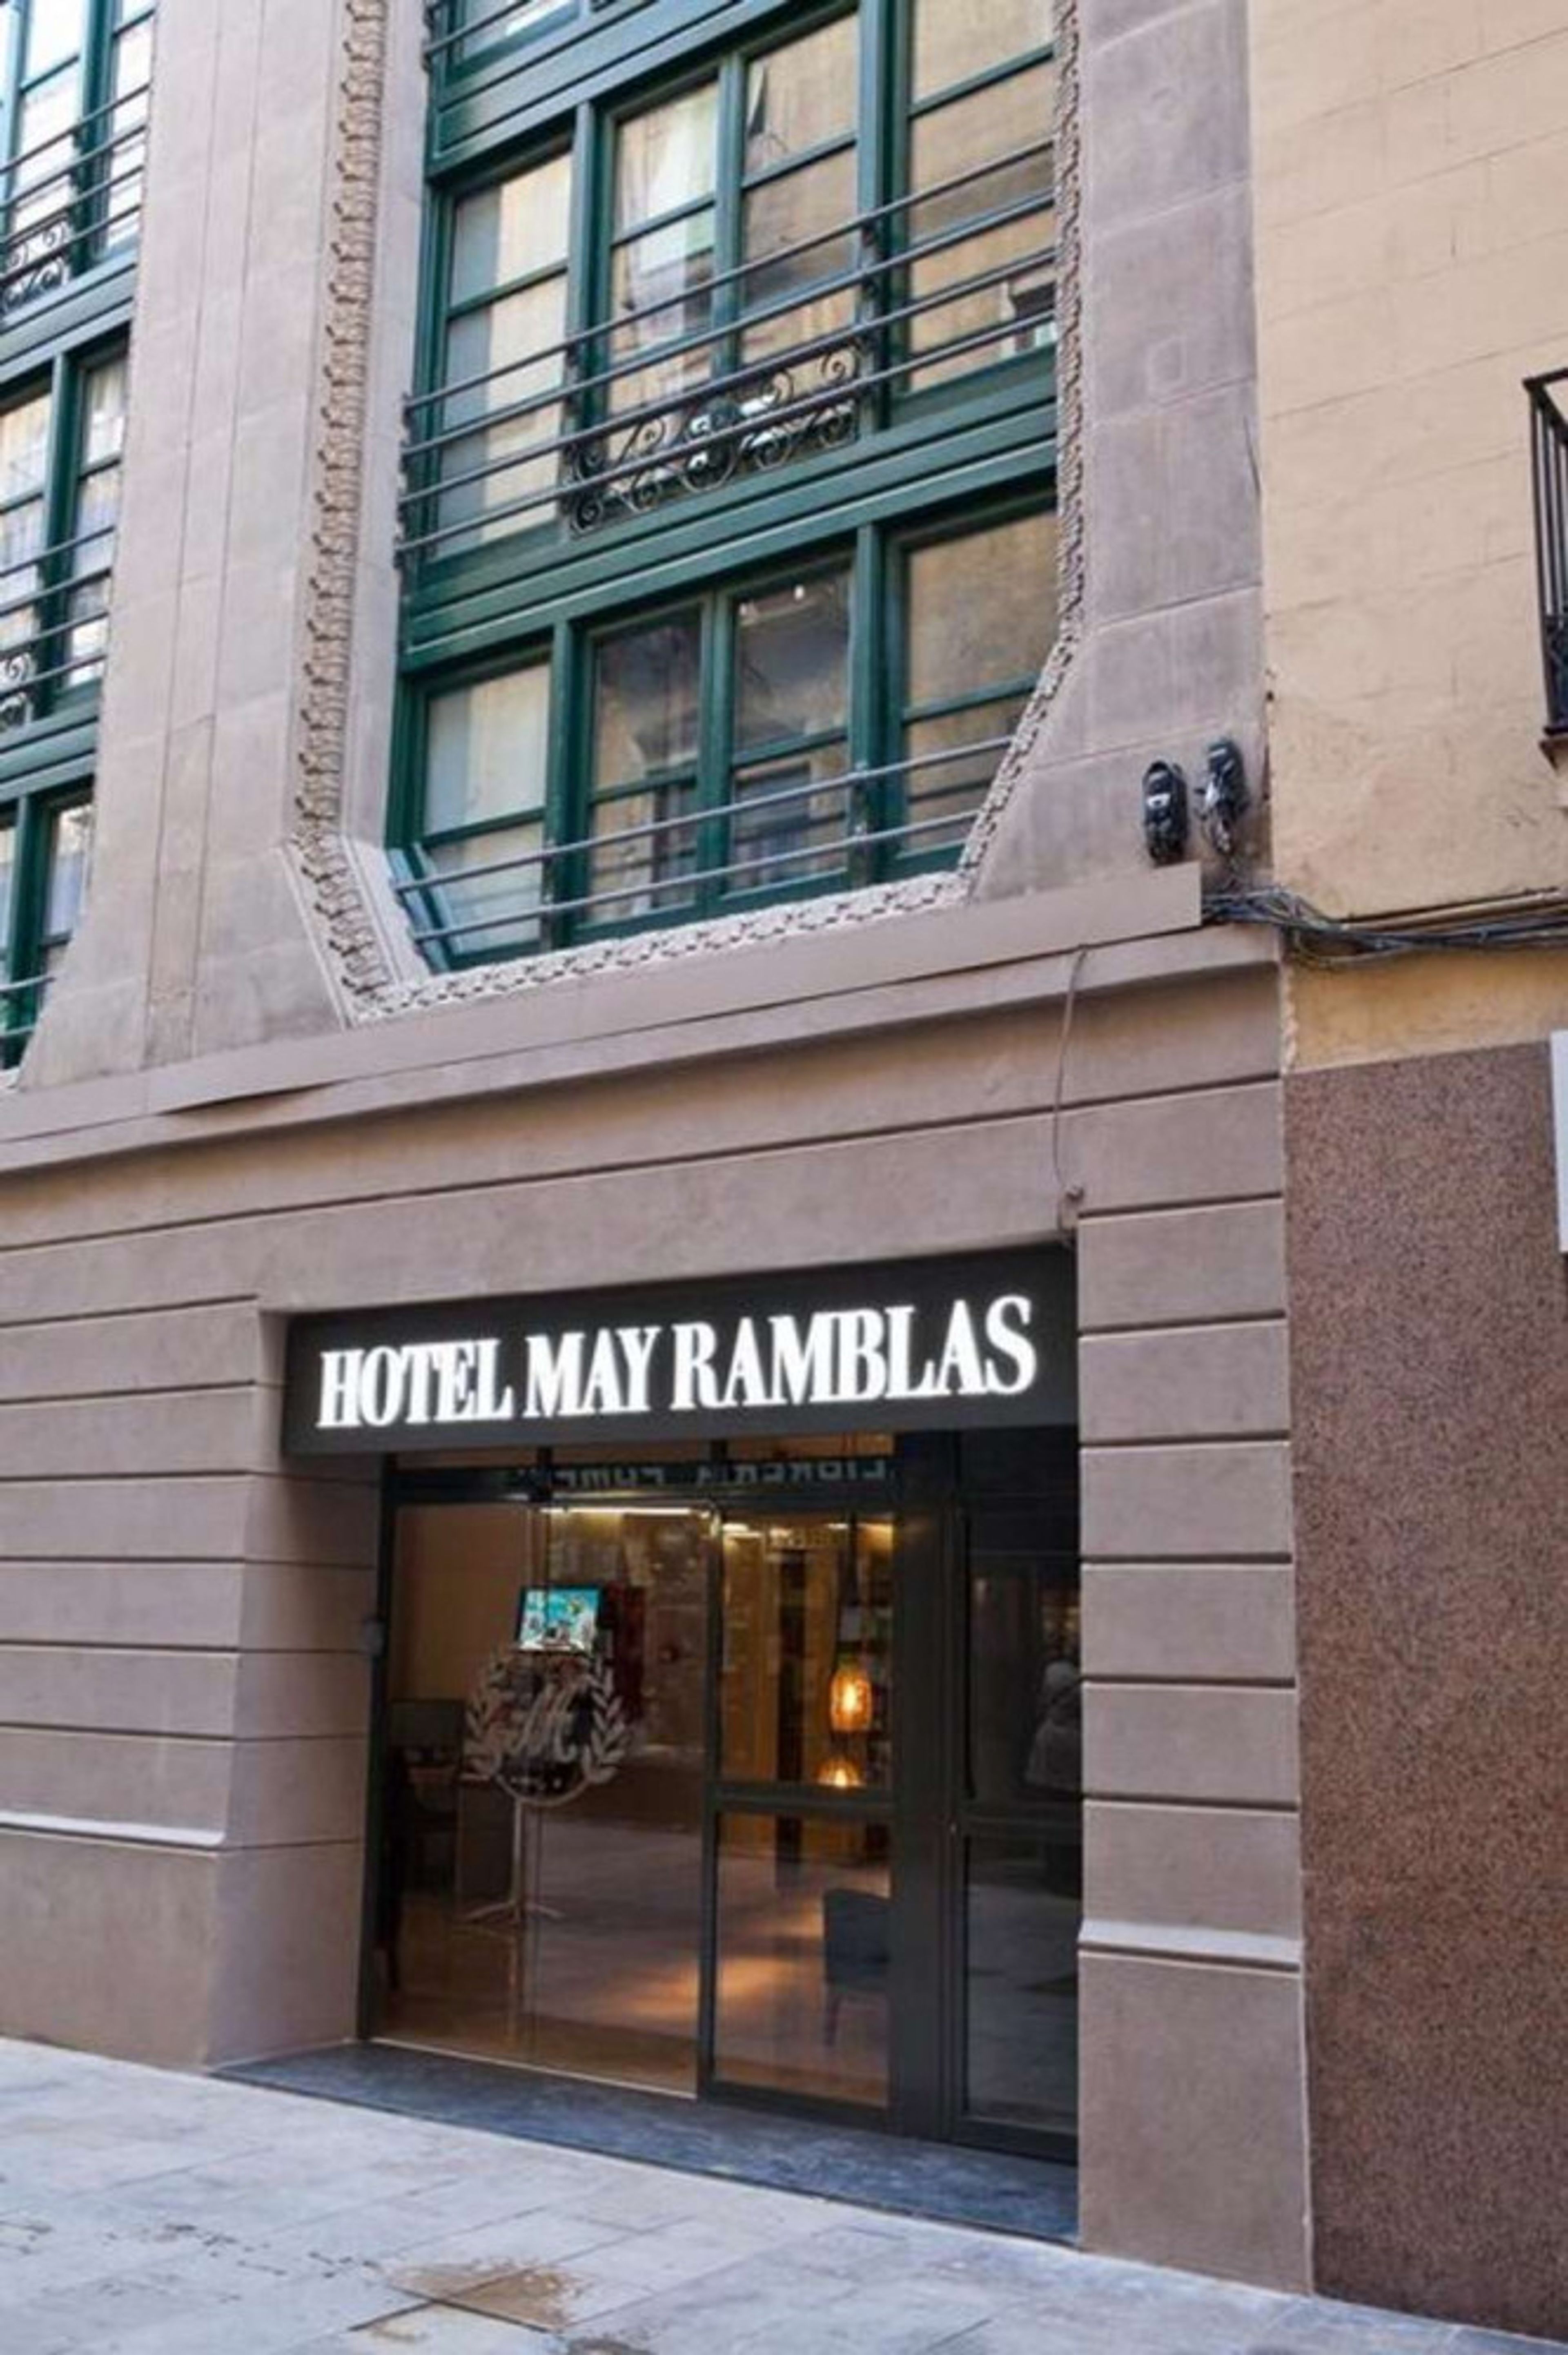 May Ramblas Hotelfoto3